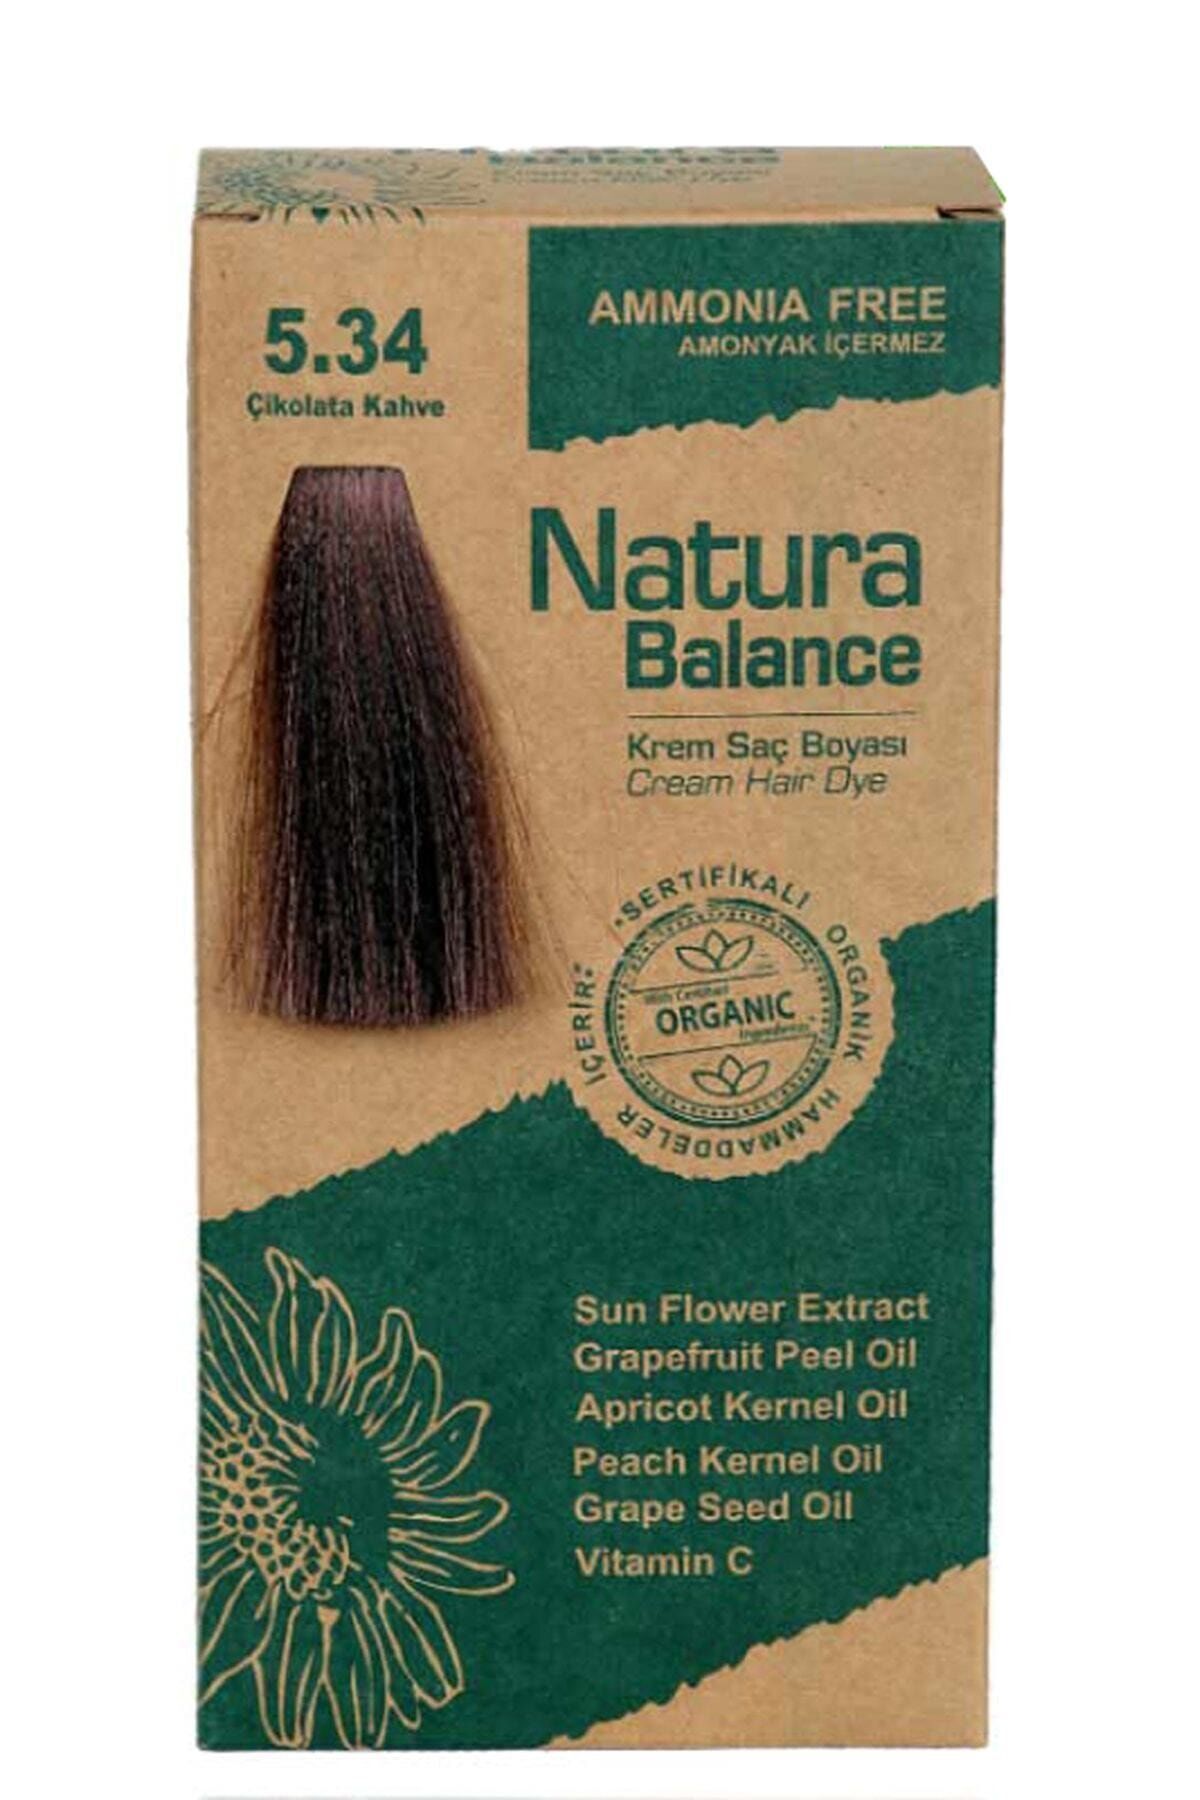 NATURABALANCE Natura Balance - Organik Krem Saç Boyası 5.34 Çikolata Kahve 60ml